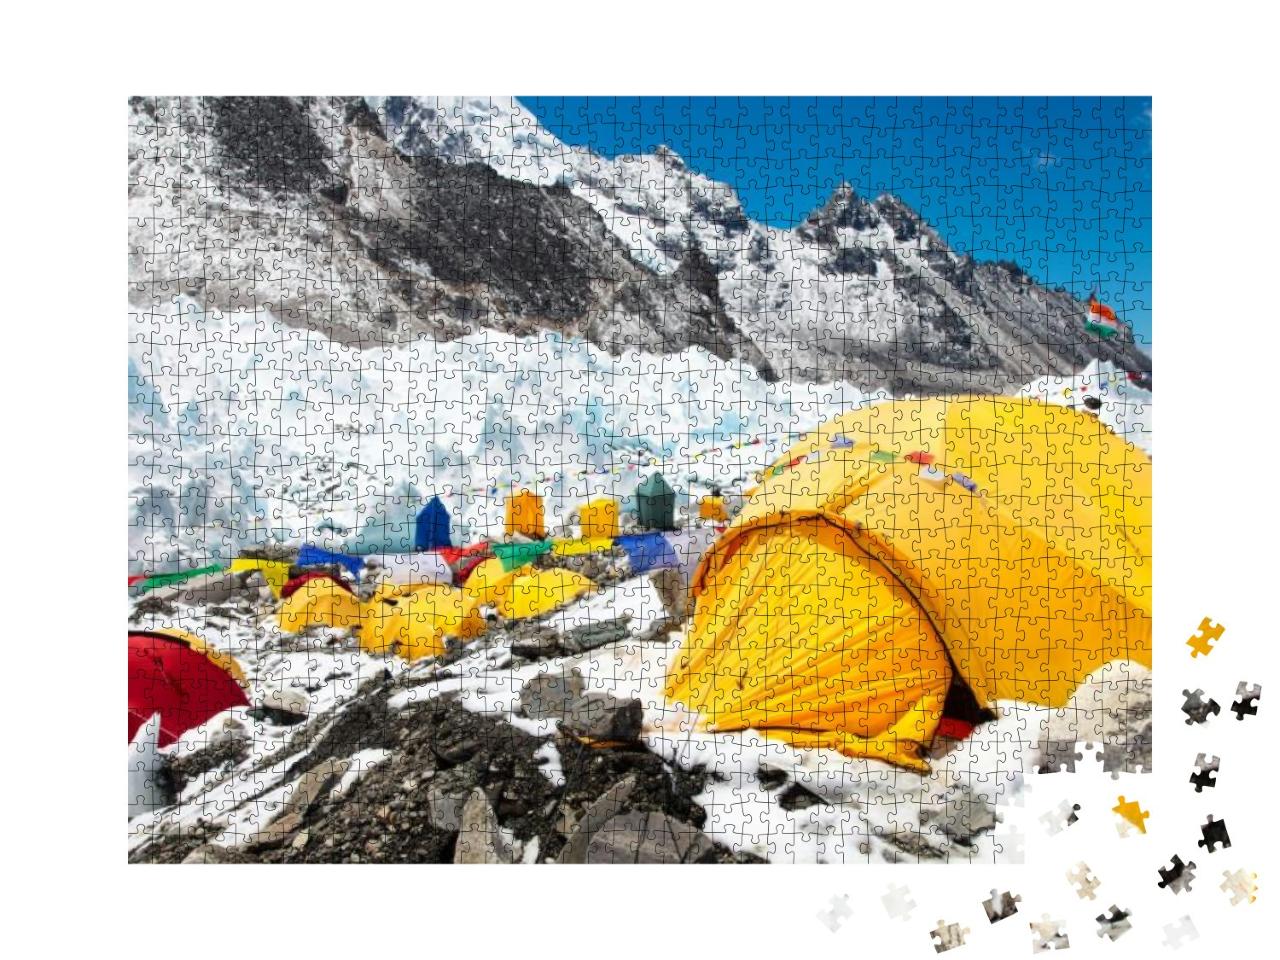 Puzzle 1000 Teile „Basislager des Mount Everest, Nepal, Himalaya“